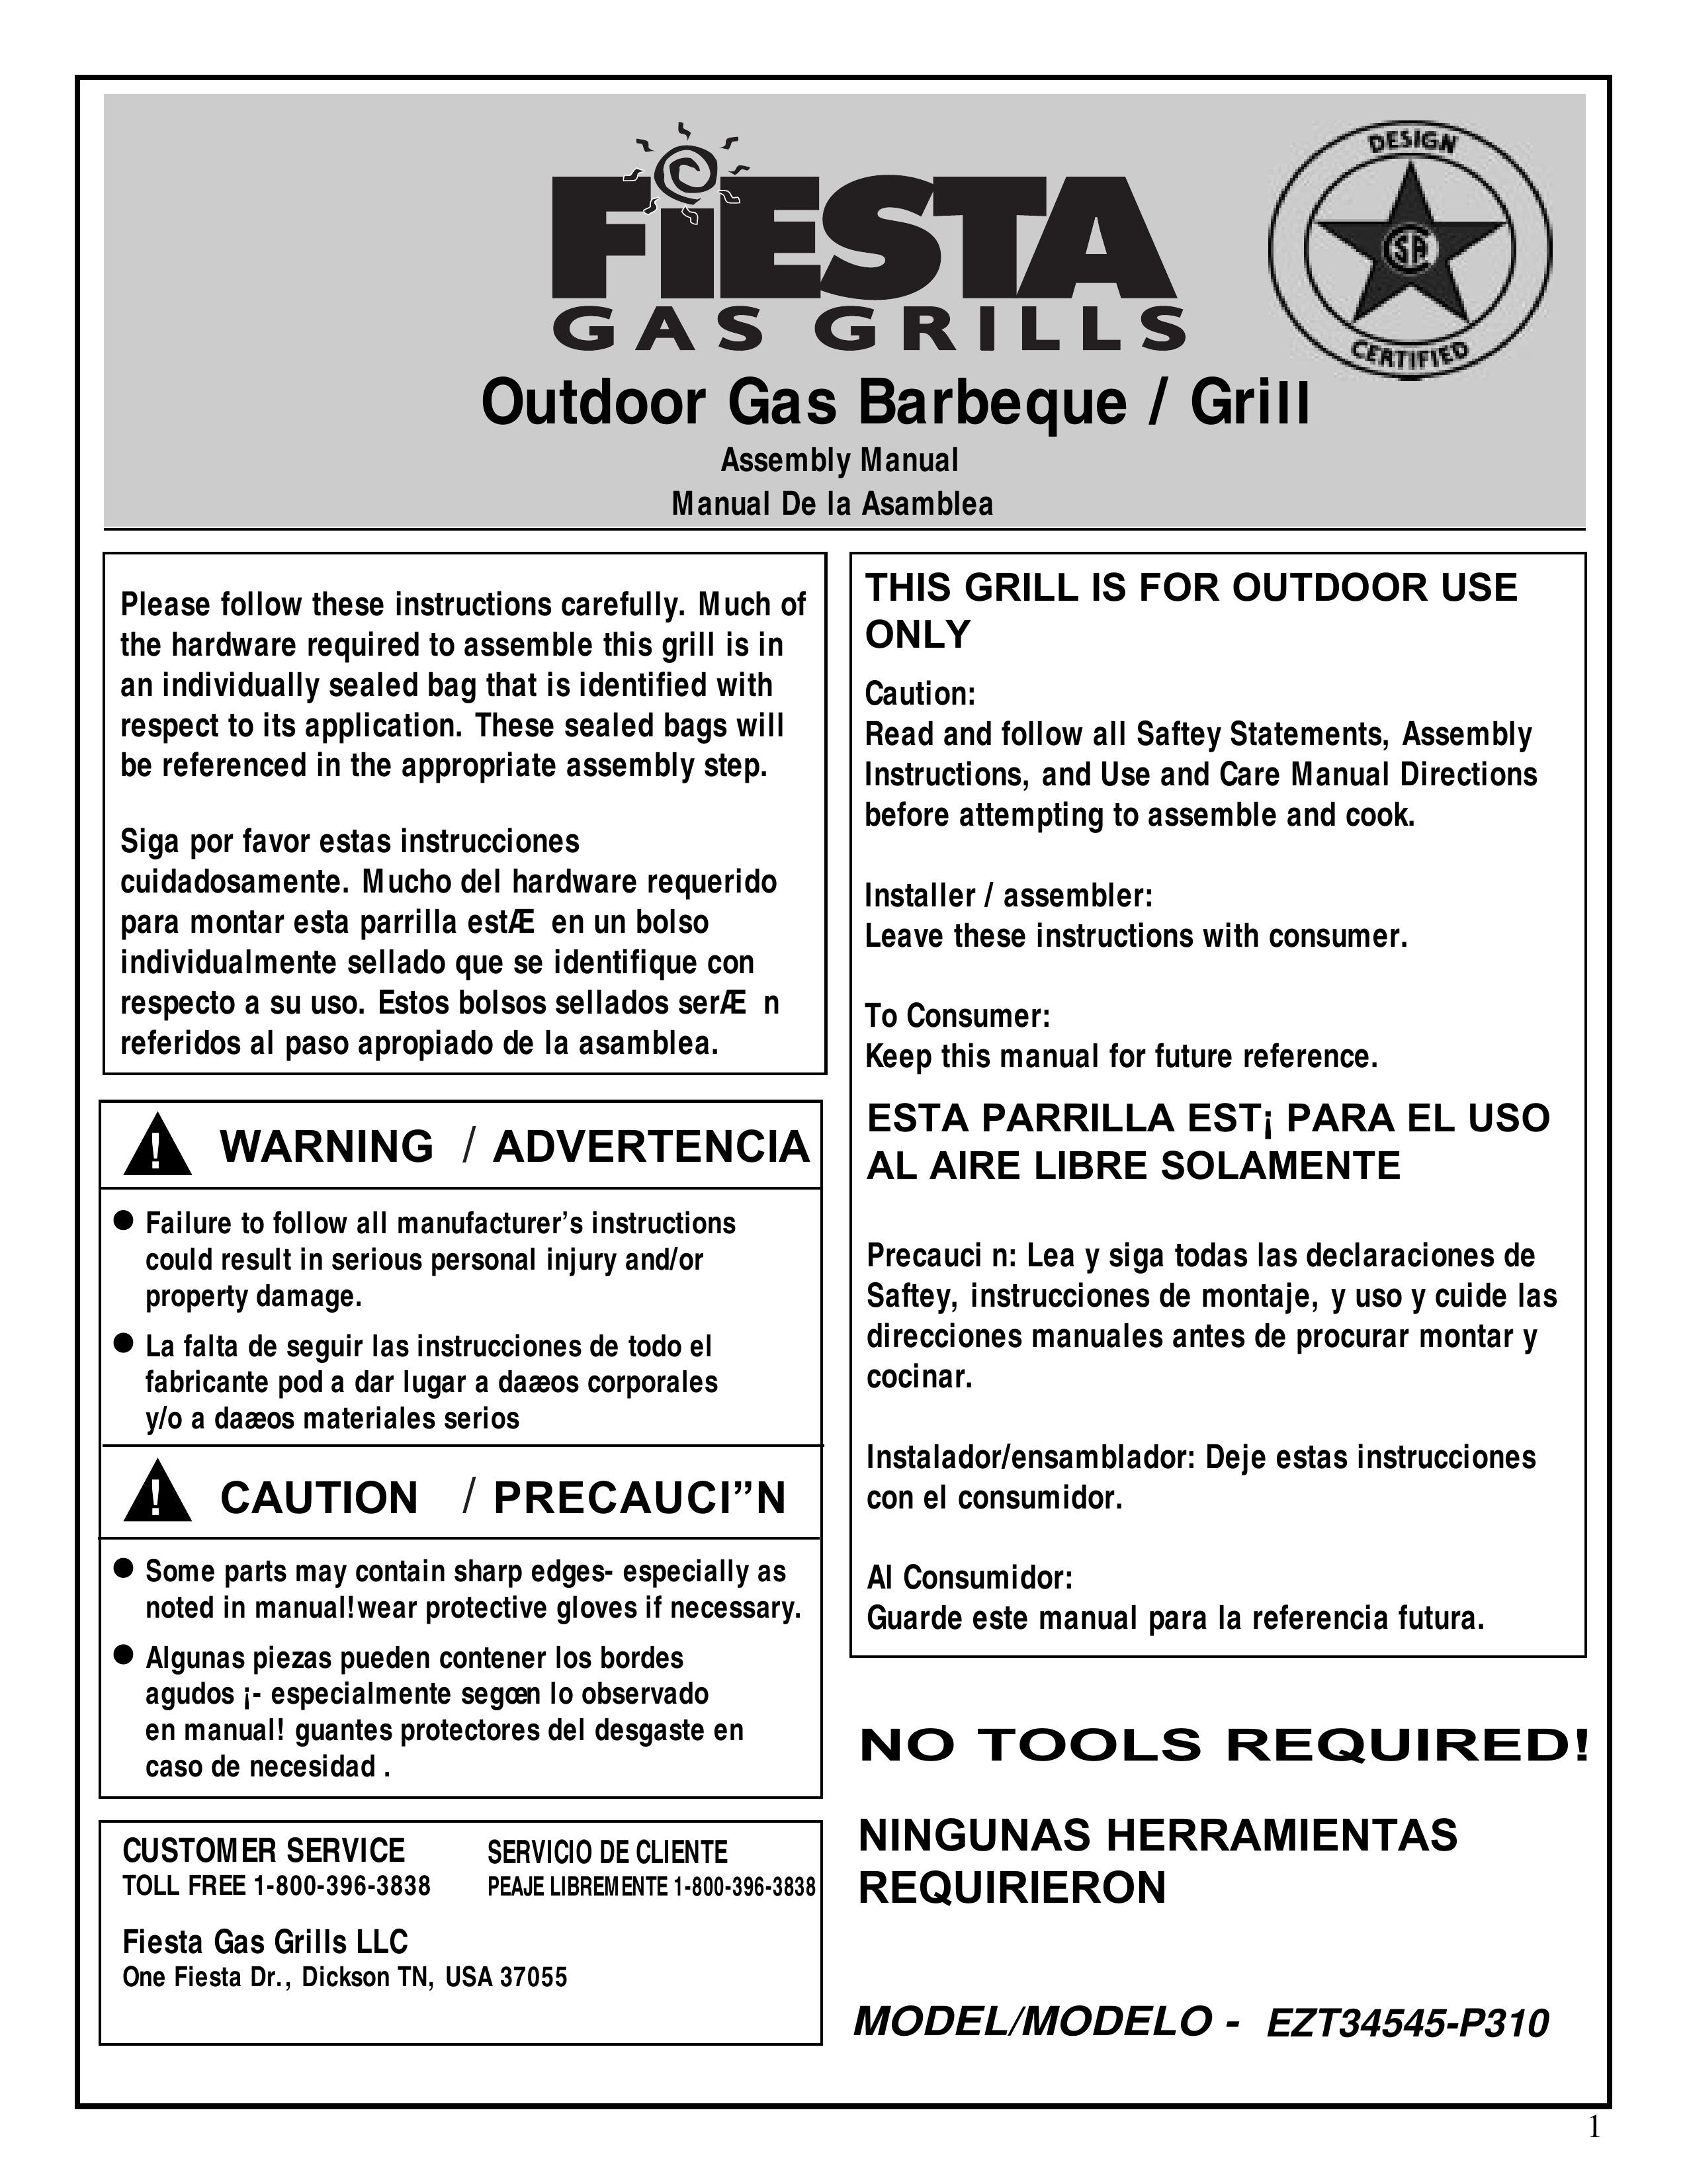 Fiesta EZT34545-P310 Gas Grill User Manual